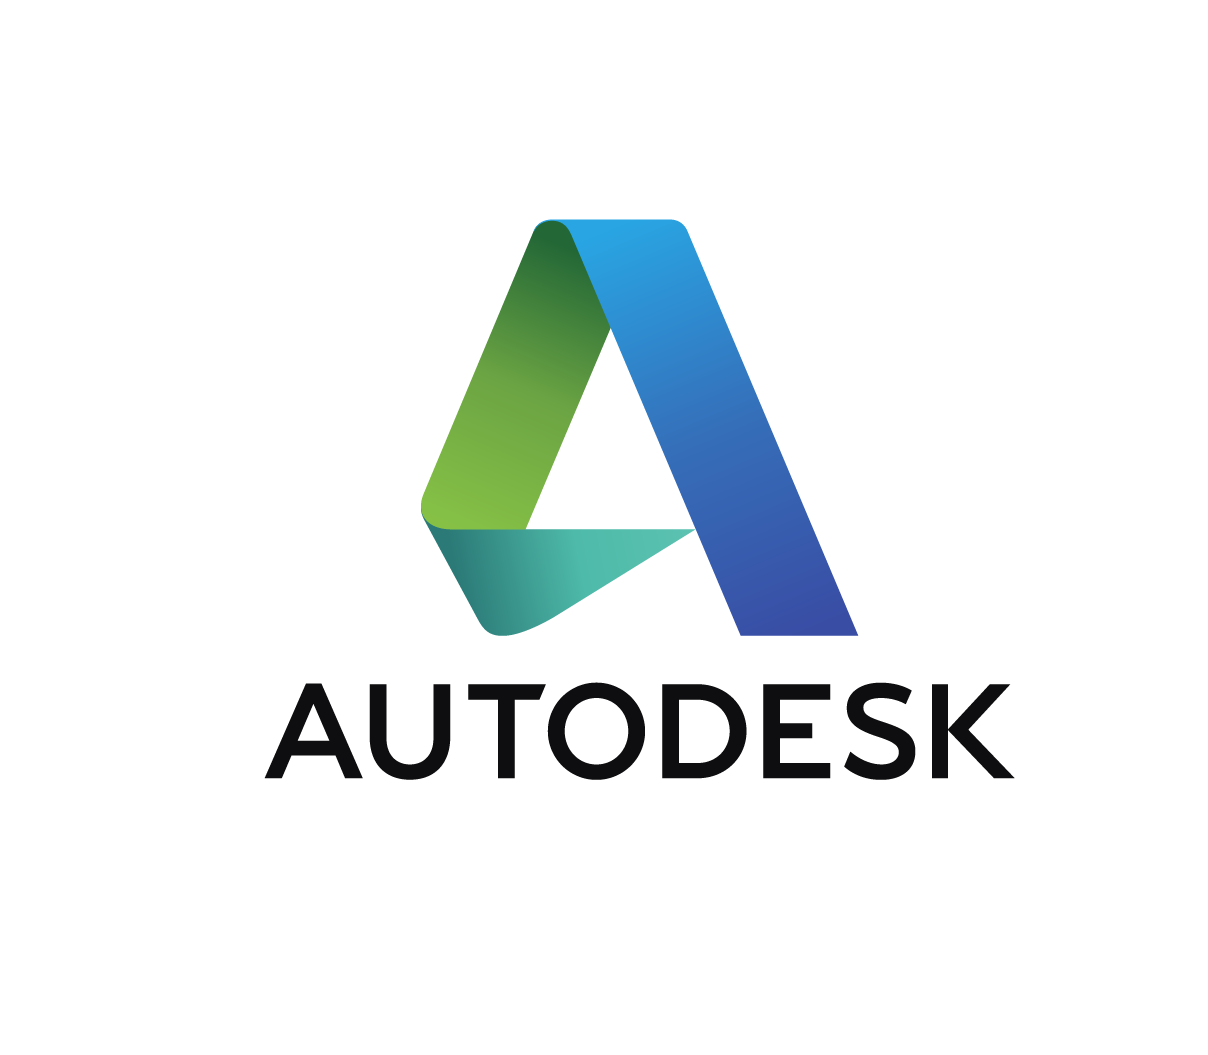 autocad for mac & windows cad software autodesk